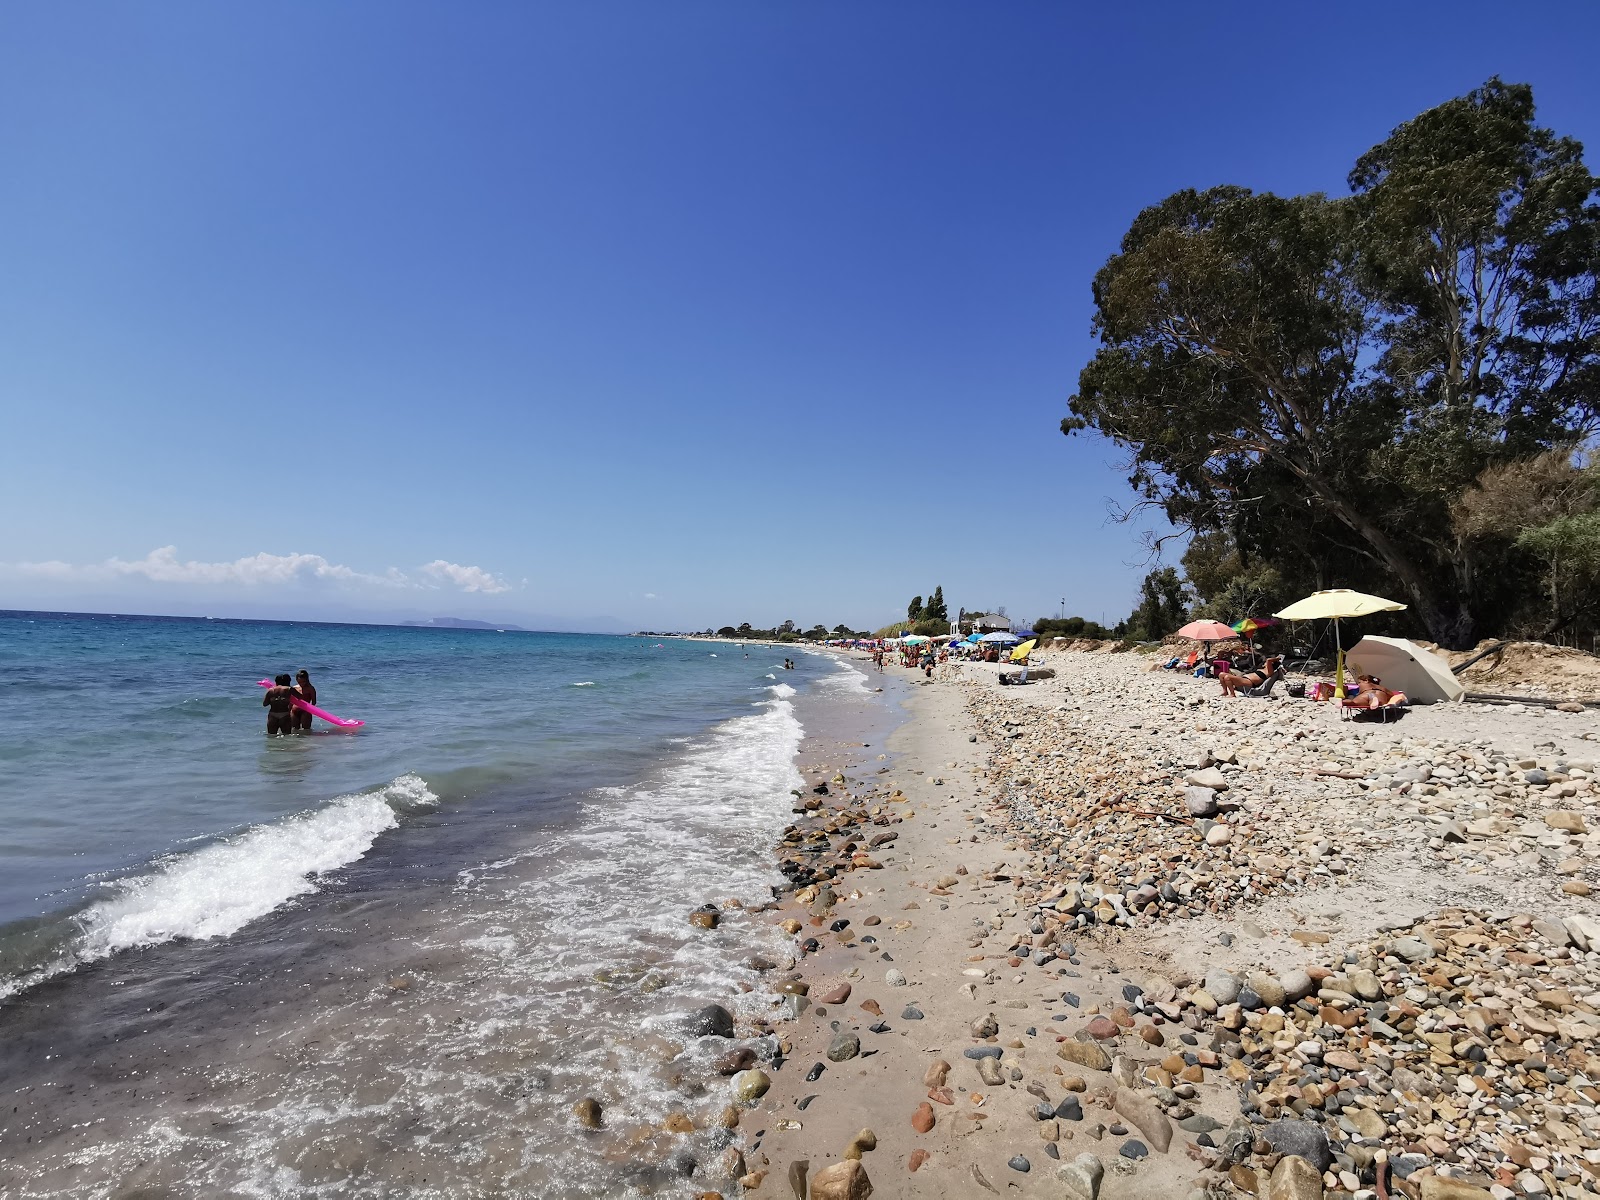 Foto av Spiaggia Marina Residence med rymlig strand